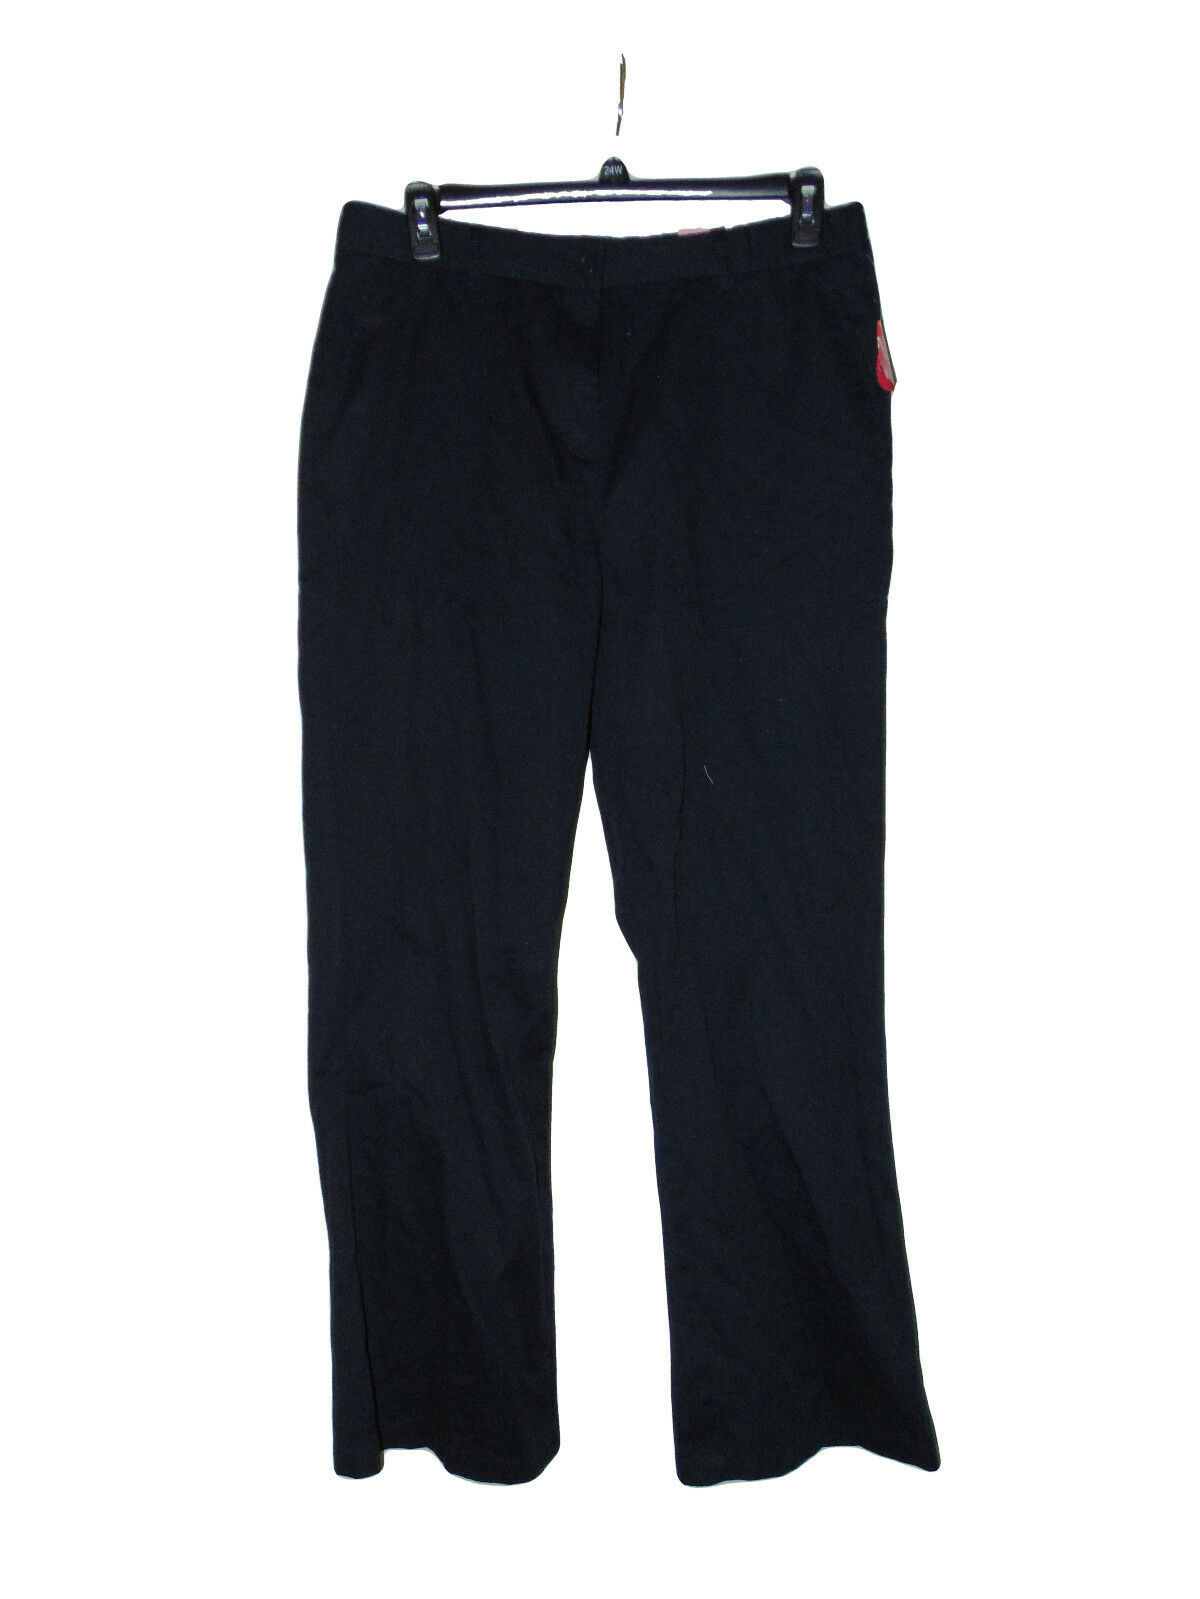 Izod Navy Blue School Pants Size 18.5 Plus Nwt - Pants